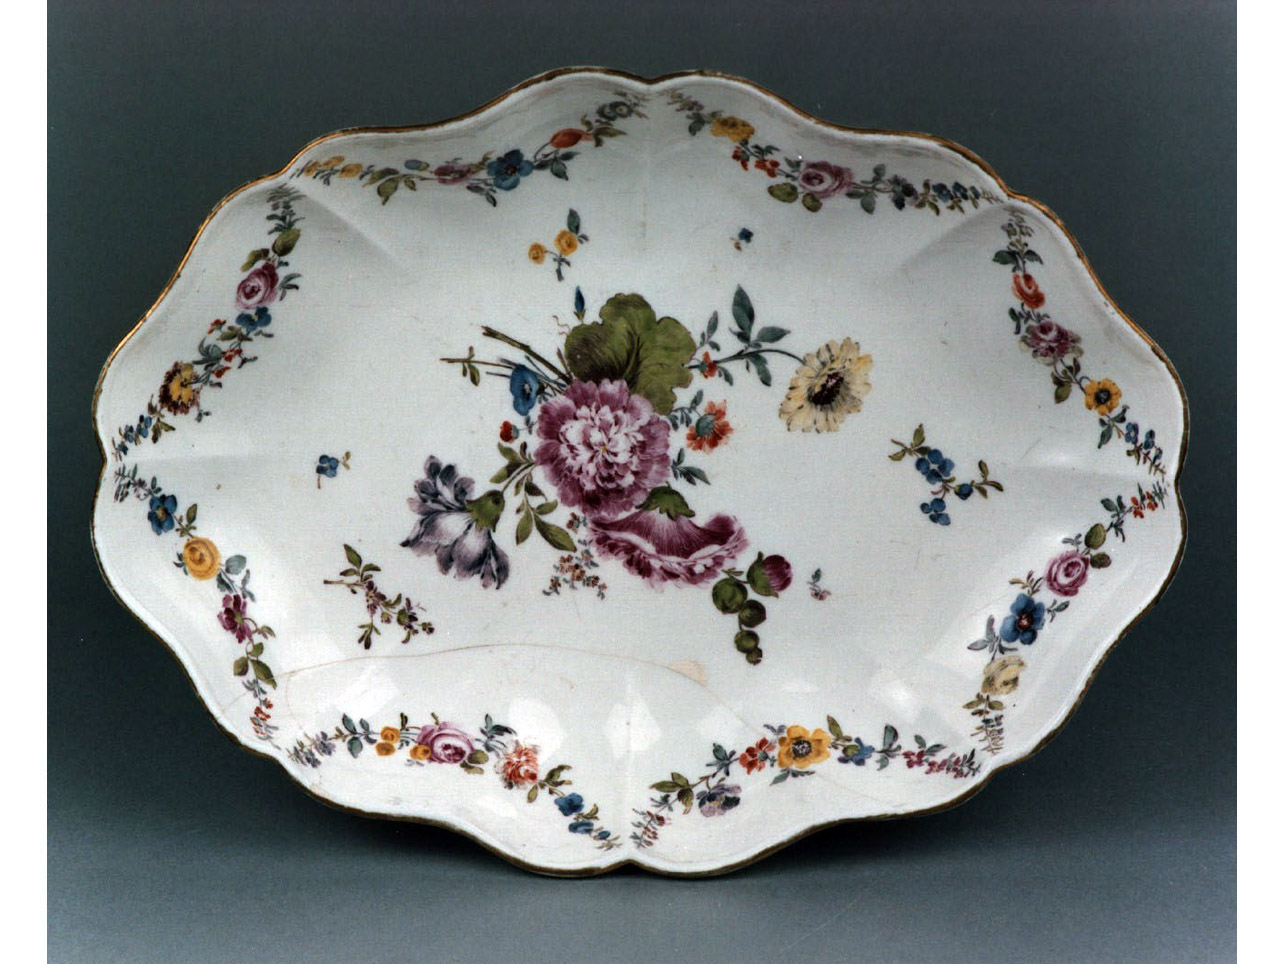 motivi decorativi floreali (coppa) - manifattura di Meissen (sec. XVIII)